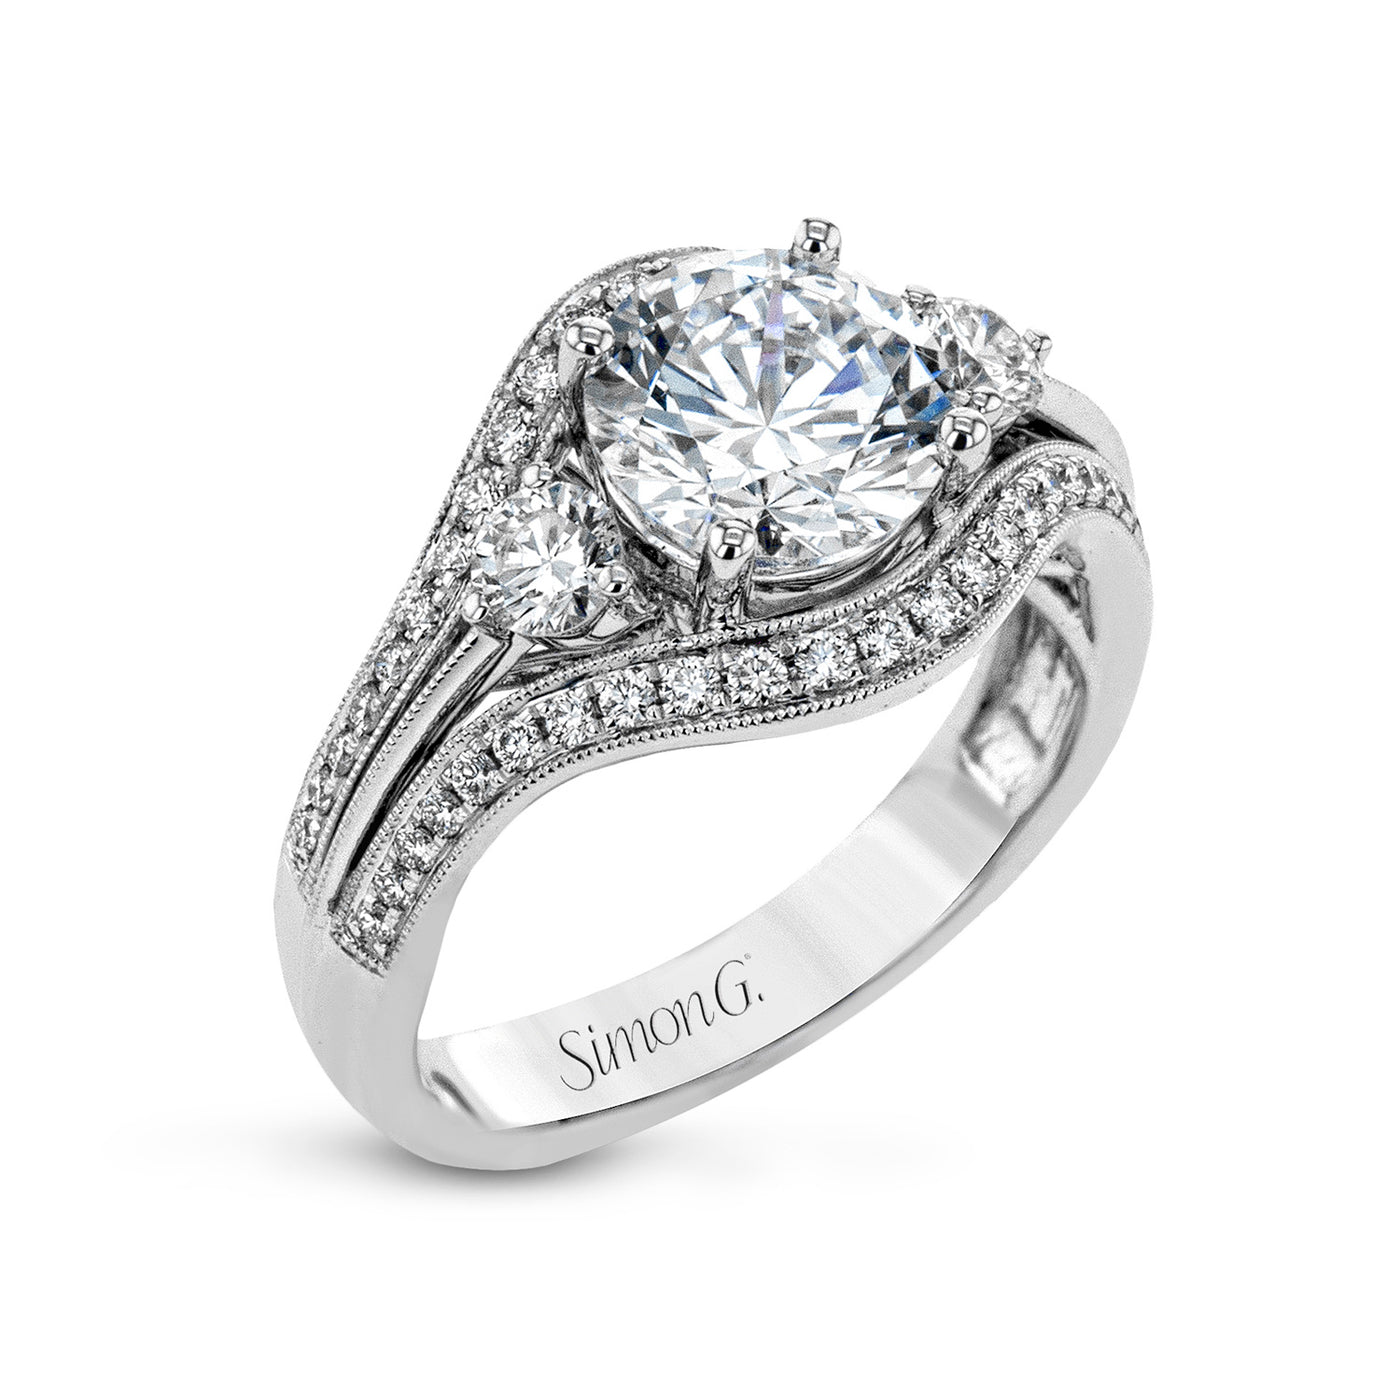 Simon G 18k White Gold Round Diamond Semi-Mount Engagement Ring – NR531